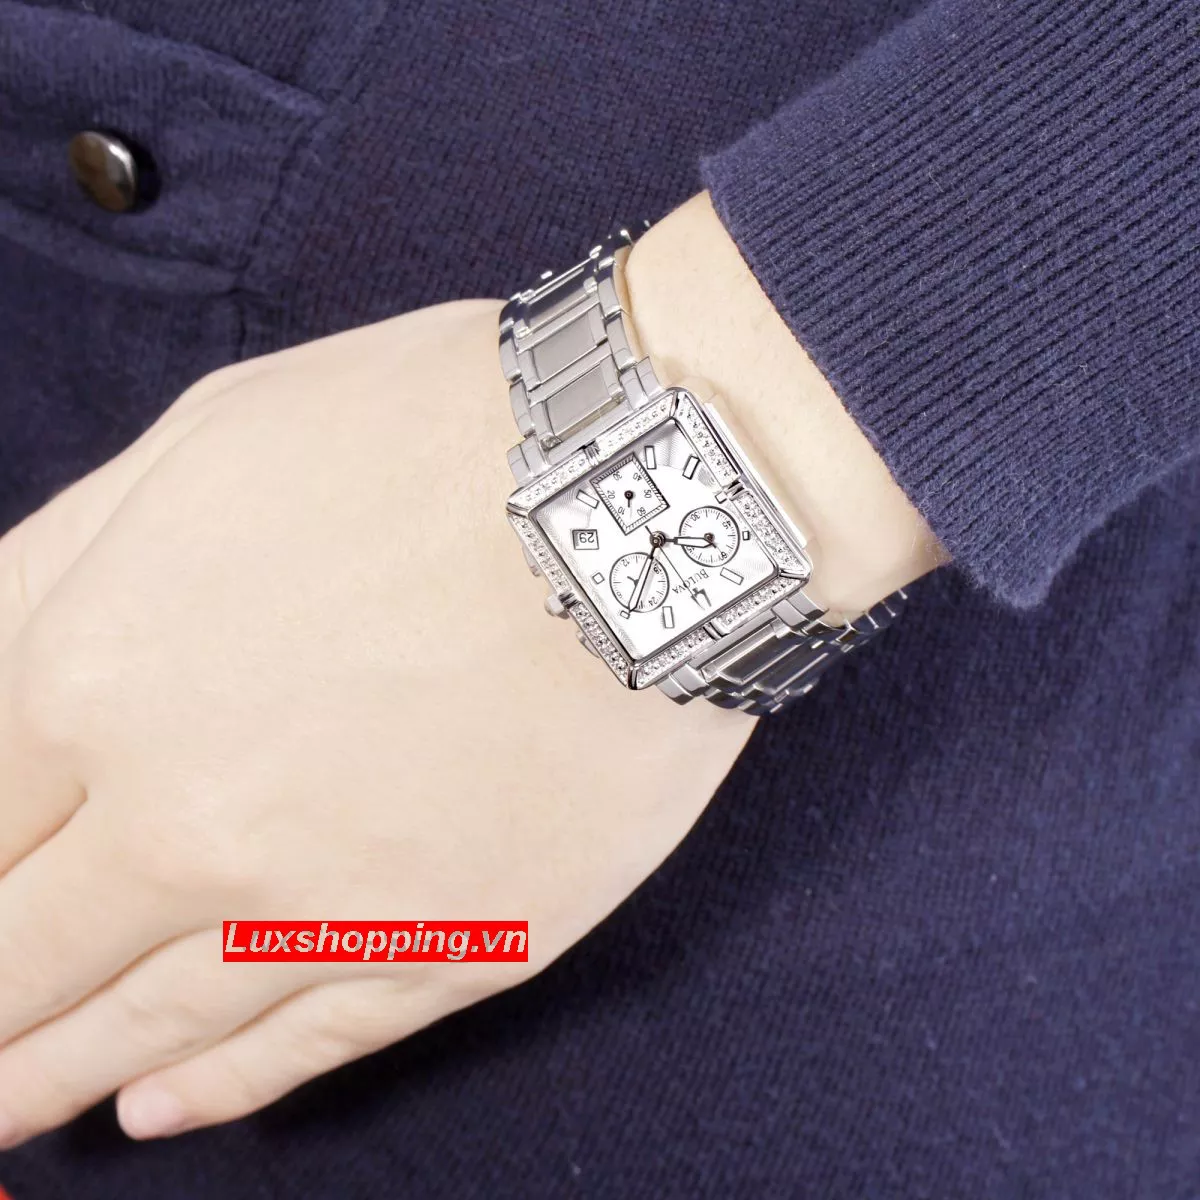 Bulova Women's Diamond Watch 29mm 